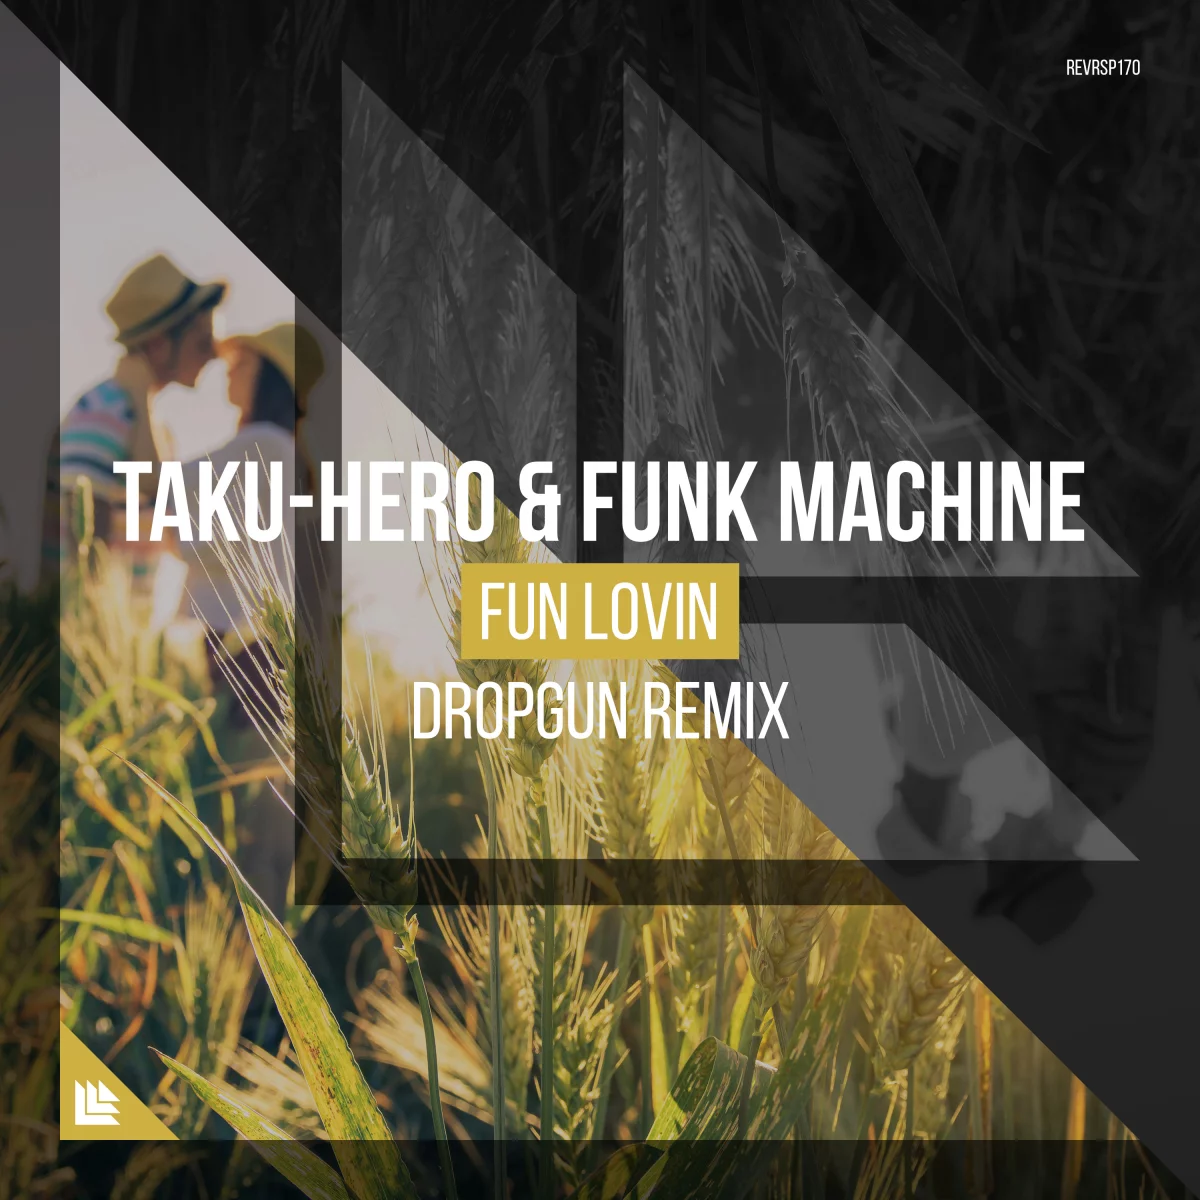 Fun Lovin (Dropgun Remix) - Taku-Hero & Funk Machine